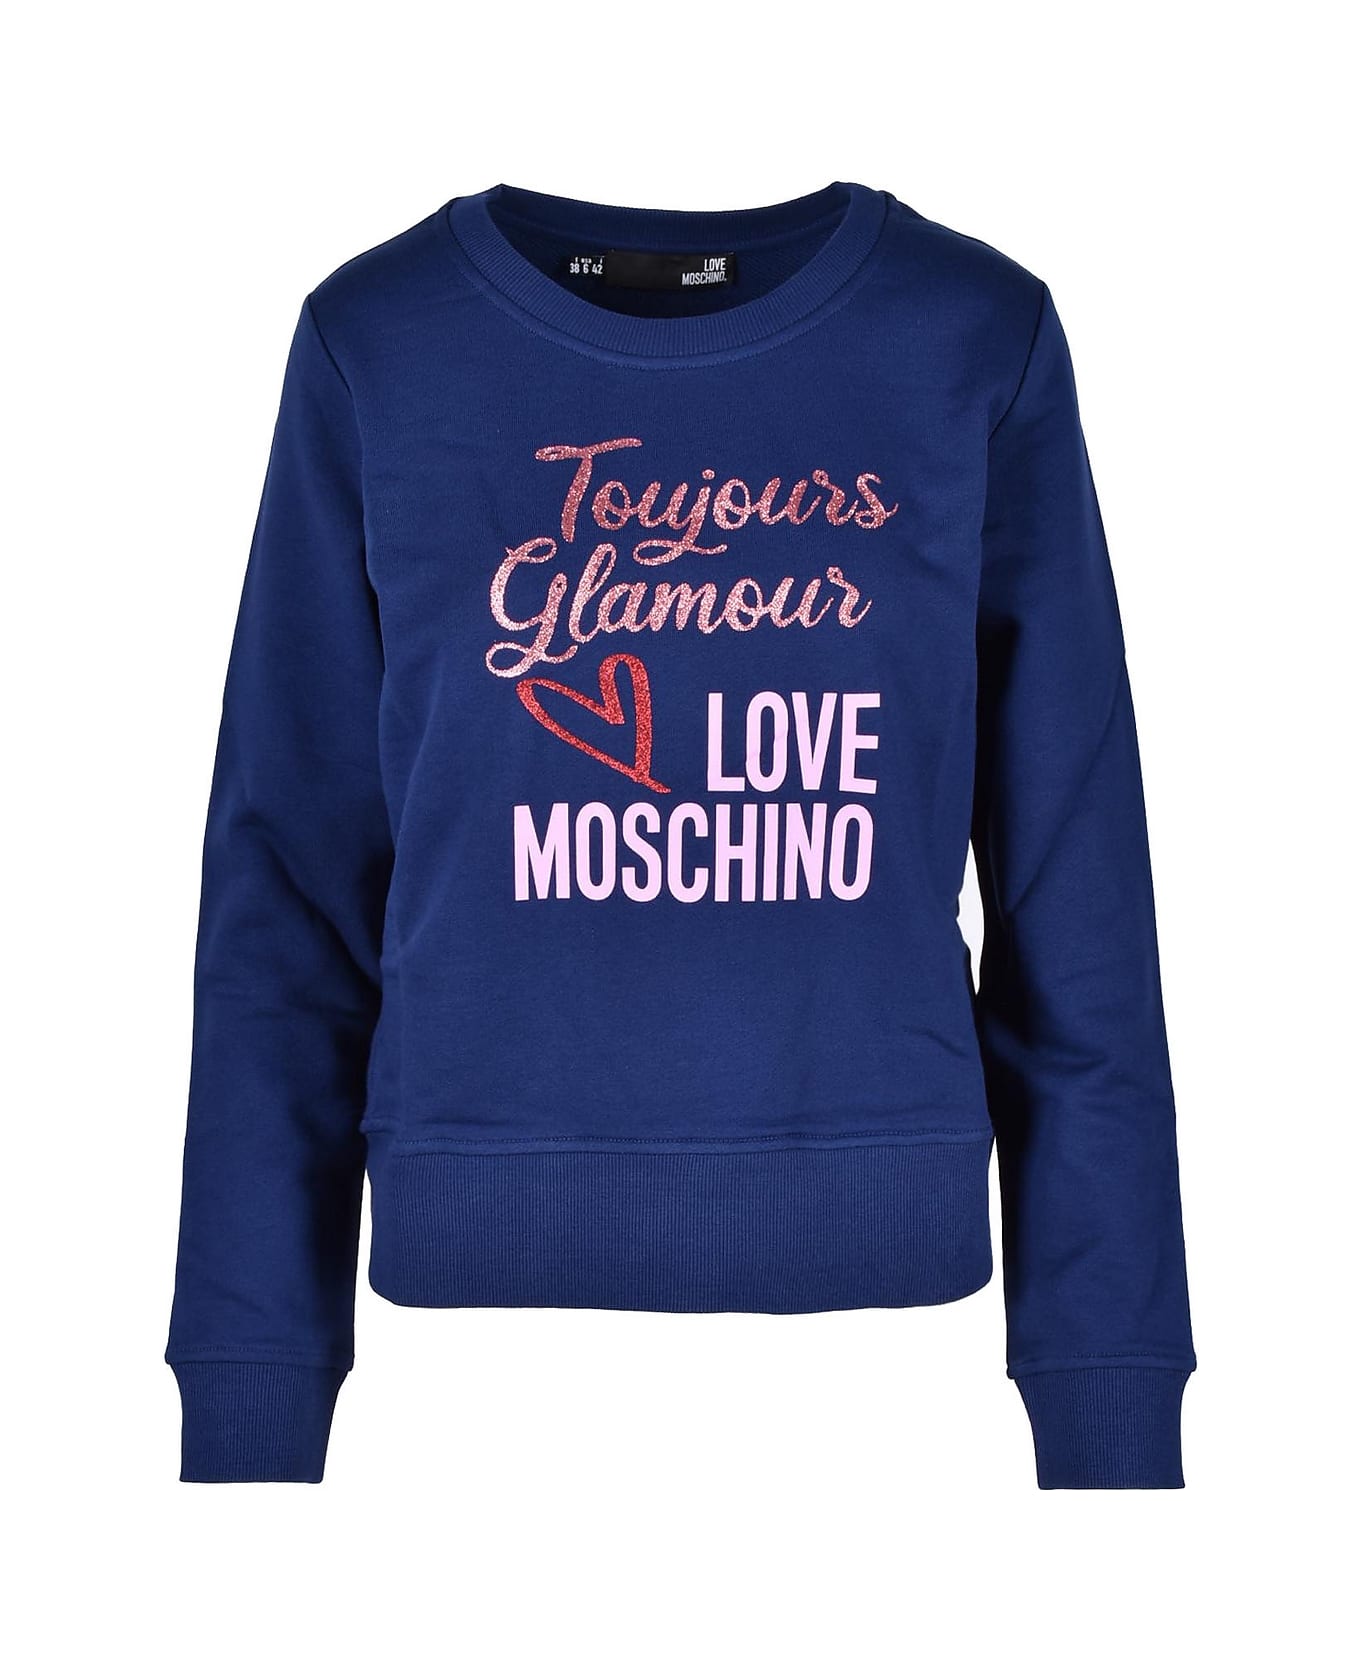 Love Moschino Women's Blue Sweatshirt - Blue